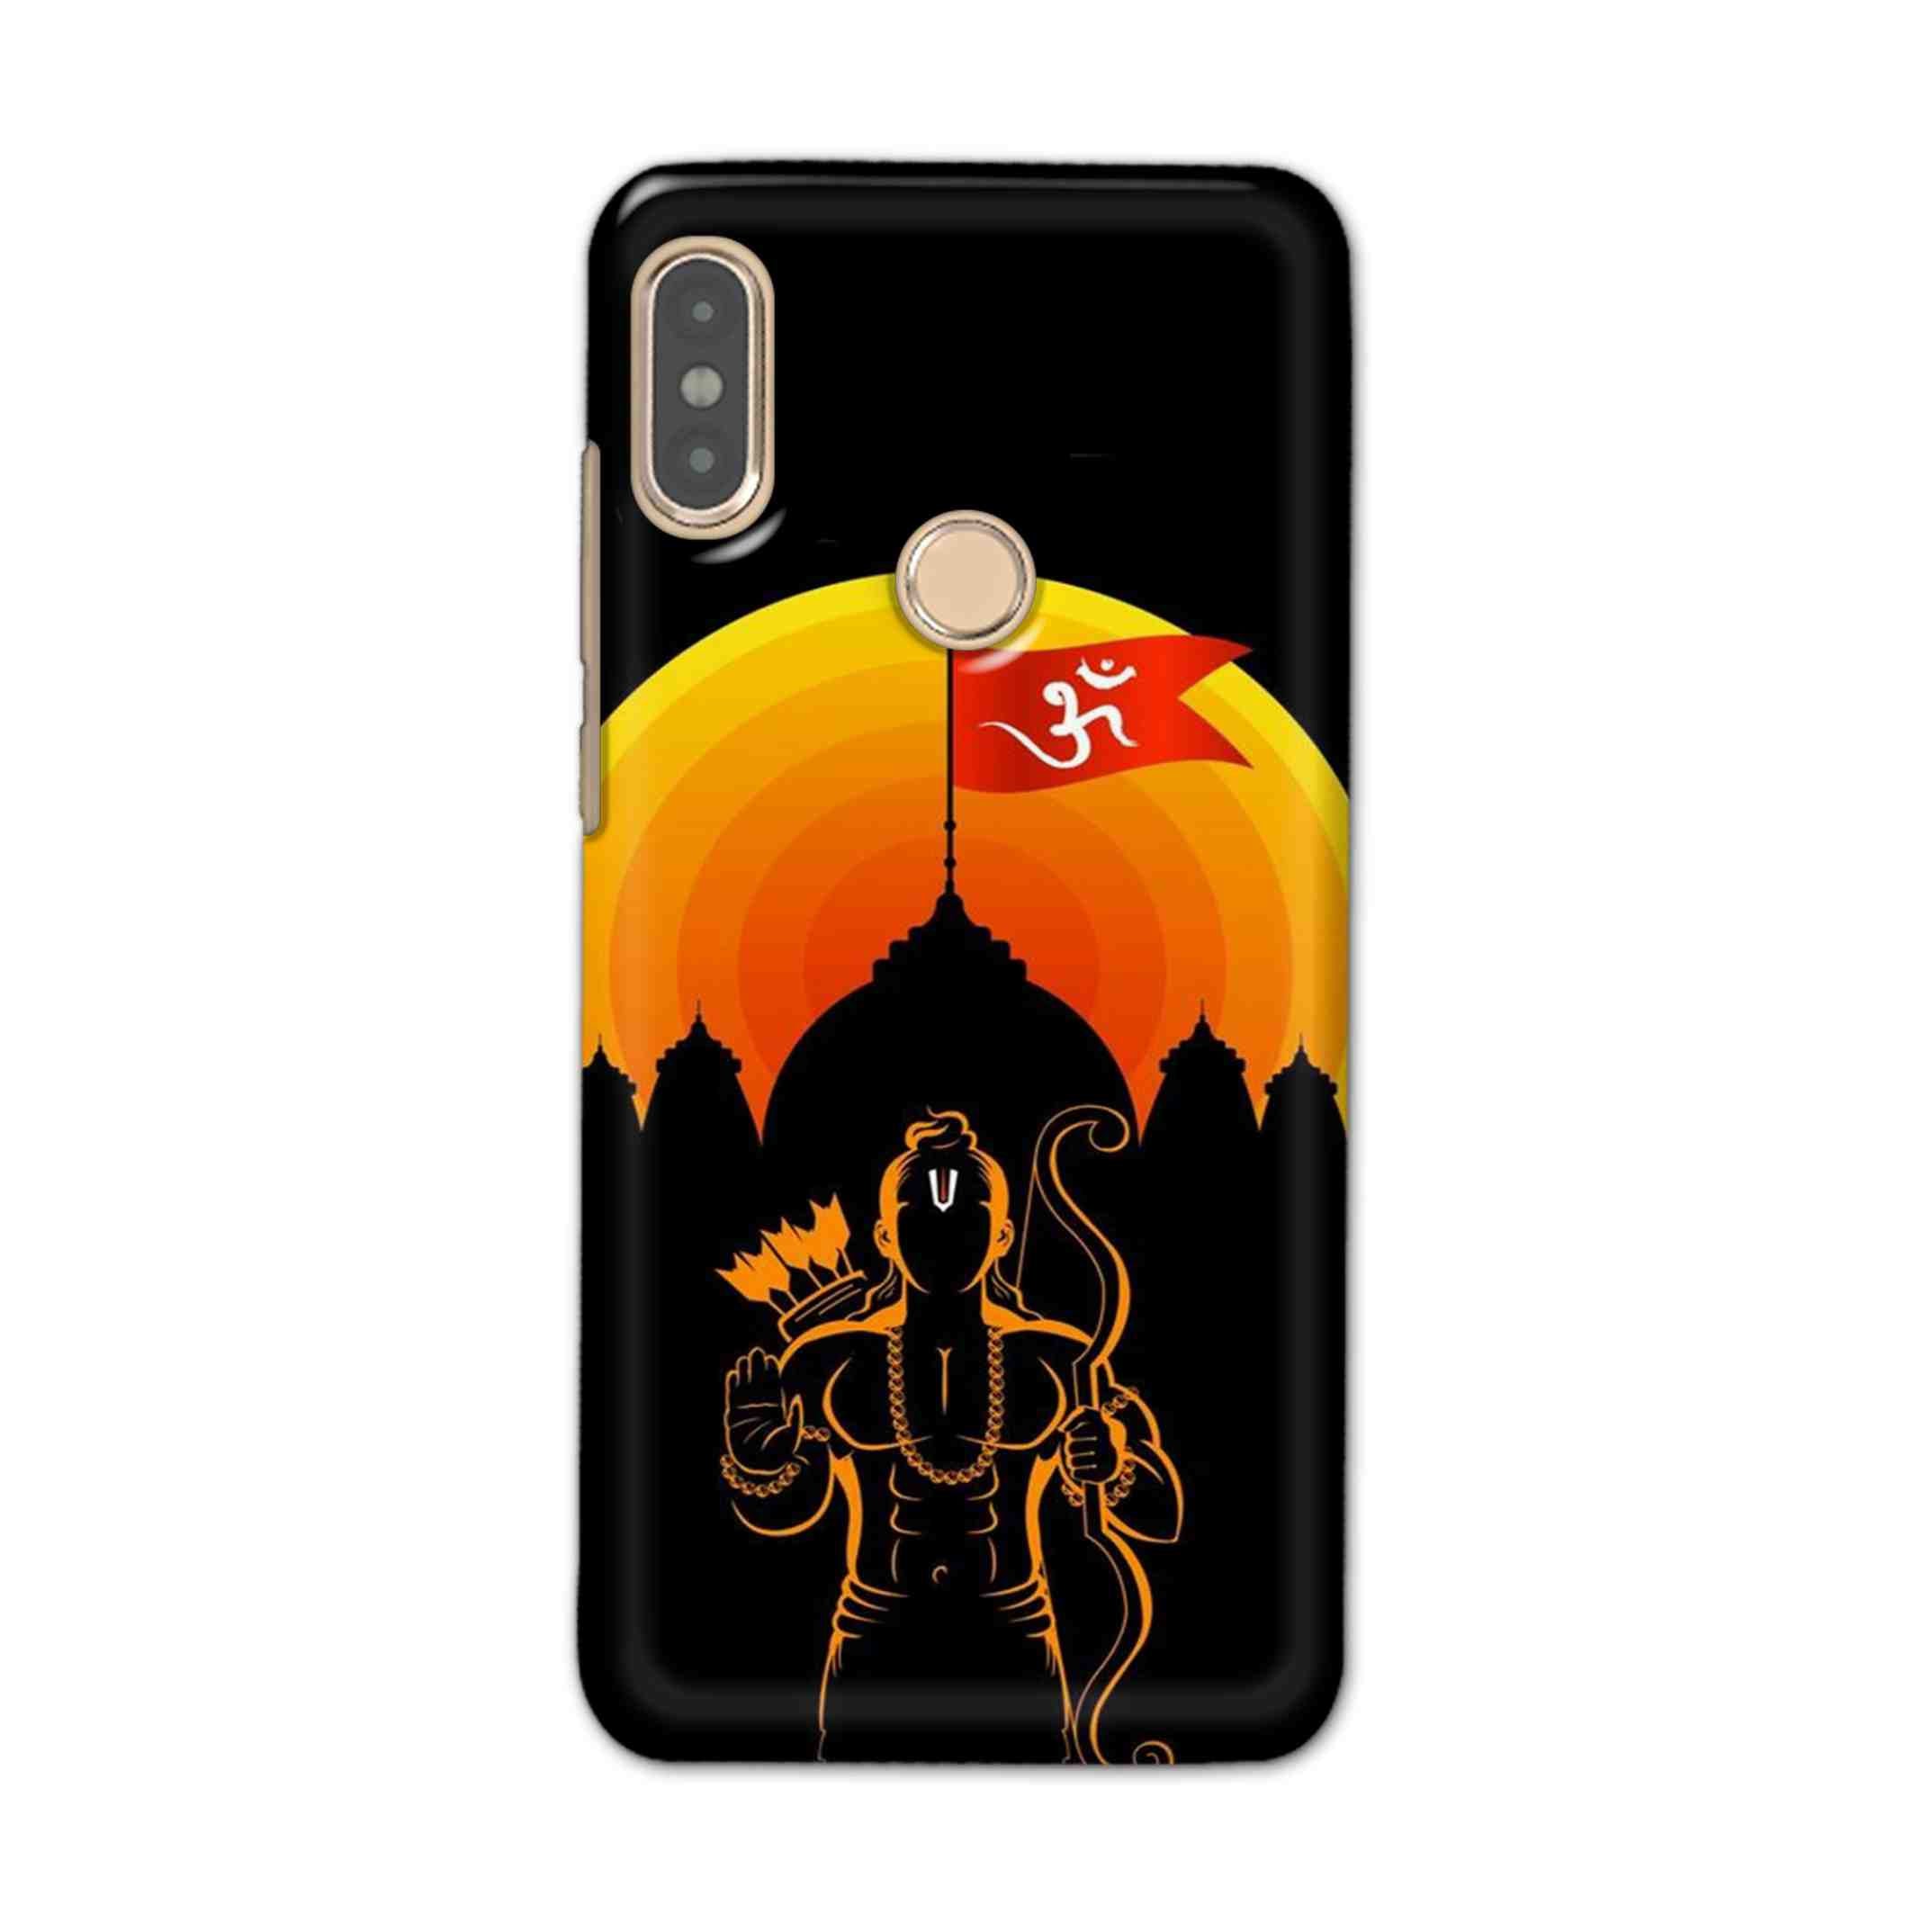 Buy Ram Ji Hard Back Mobile Phone Case Cover For Xiaomi Redmi Note 5 Pro Online